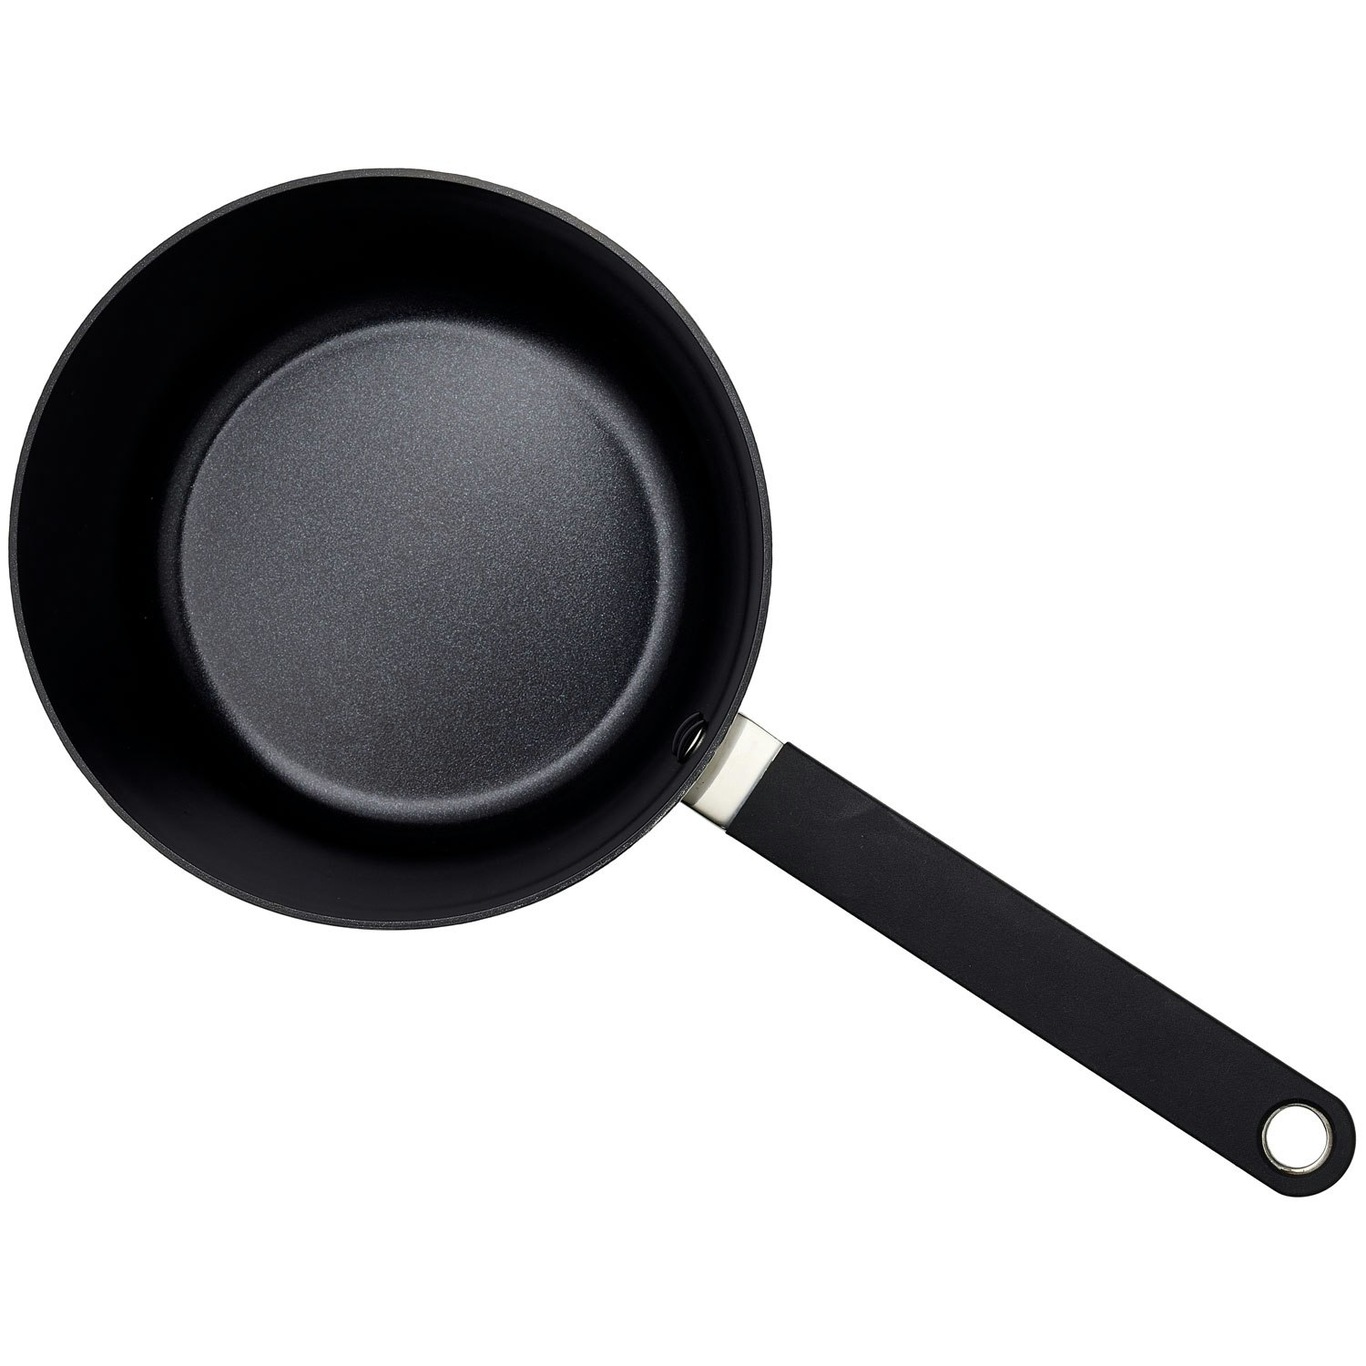 https://royaldesign.com/image/2/kitchenware-by-tareq-taylor-king-edward-saucepan-2-l-0?w=800&quality=80